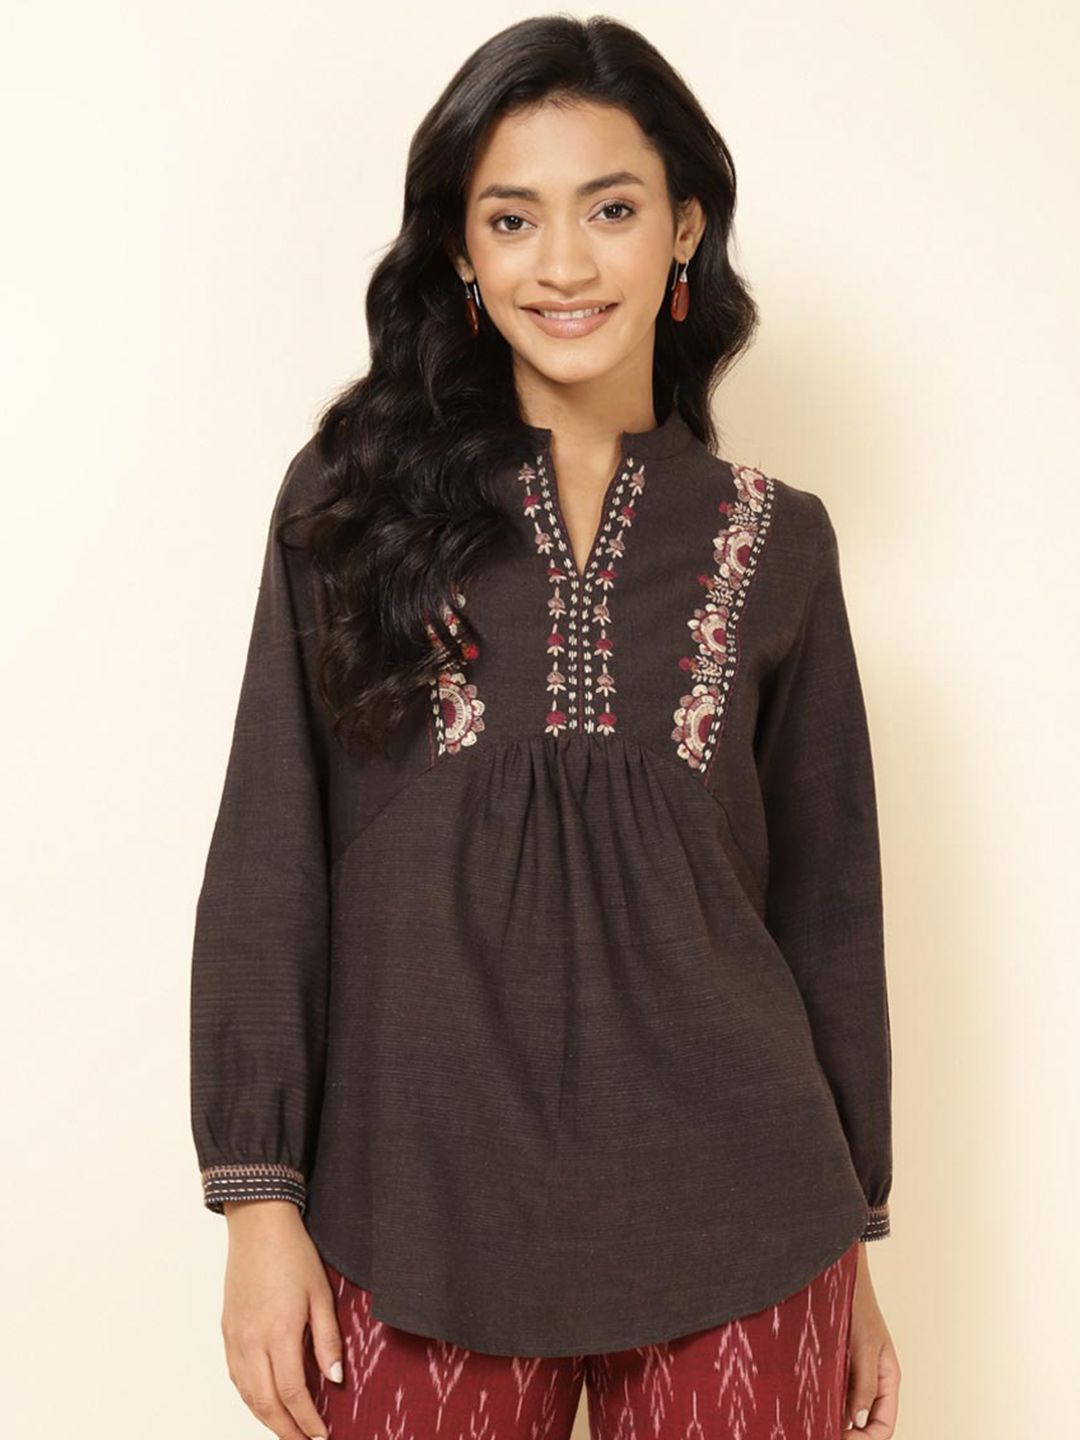 Fabindia Embroidered Mandarin Collar Cotton Regular Top Price in India